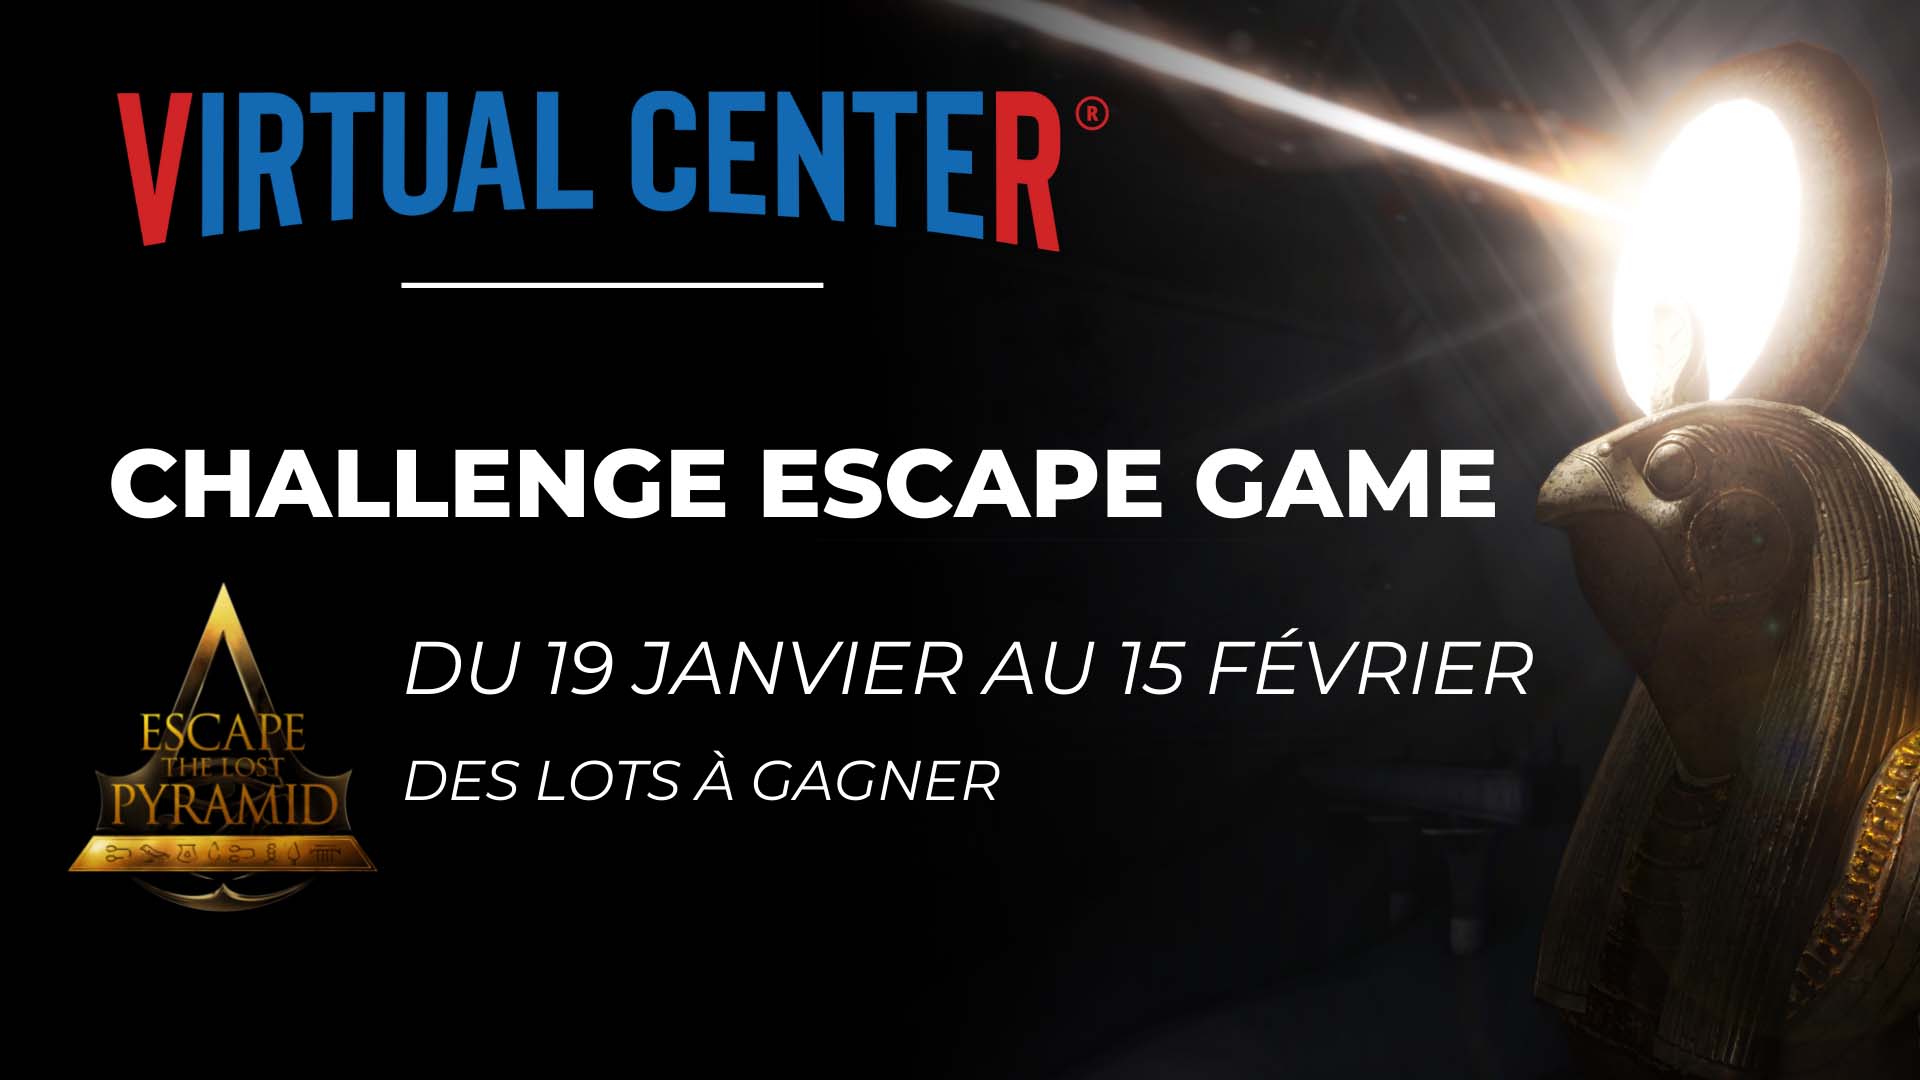 Challenge Escape Game VR Escape The Lost Pyramid Virtual Center Nantes Ouest